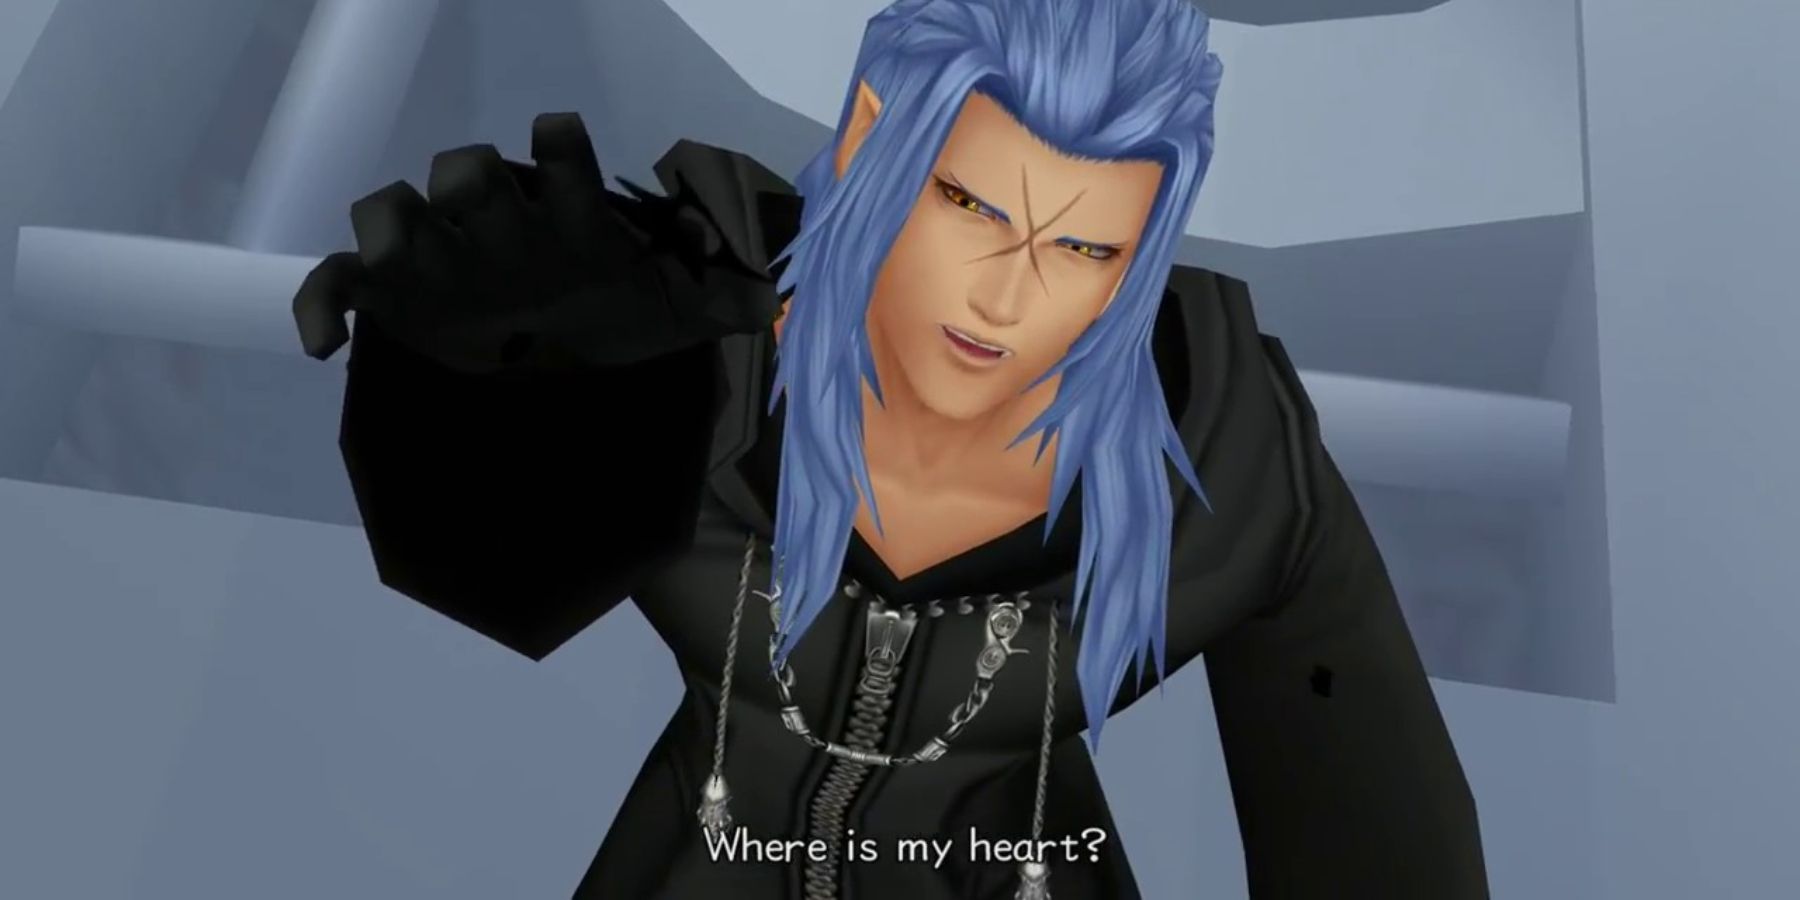 Saix reaches for Kingdom Hearts in Kingdom Hearts 2